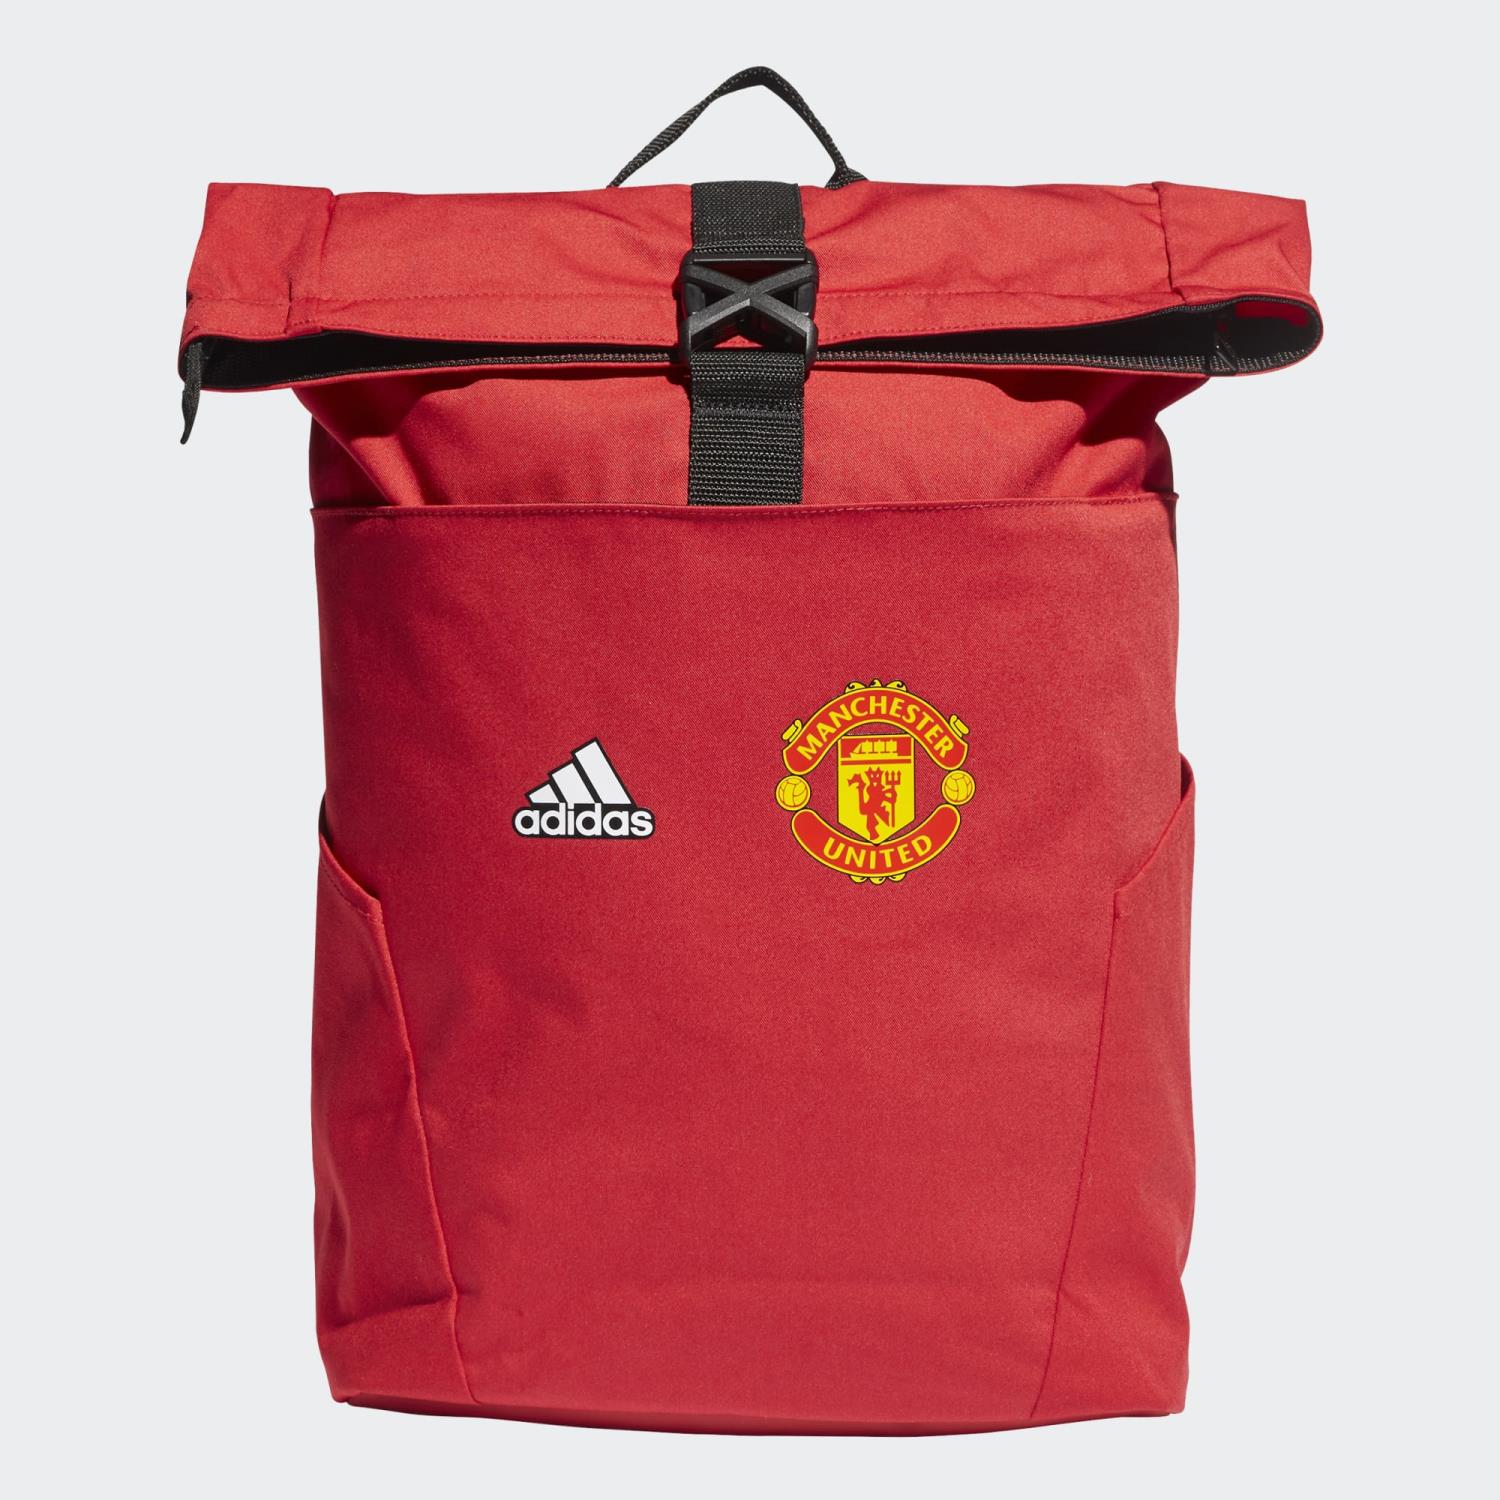 Adidas  Mufc Backpack